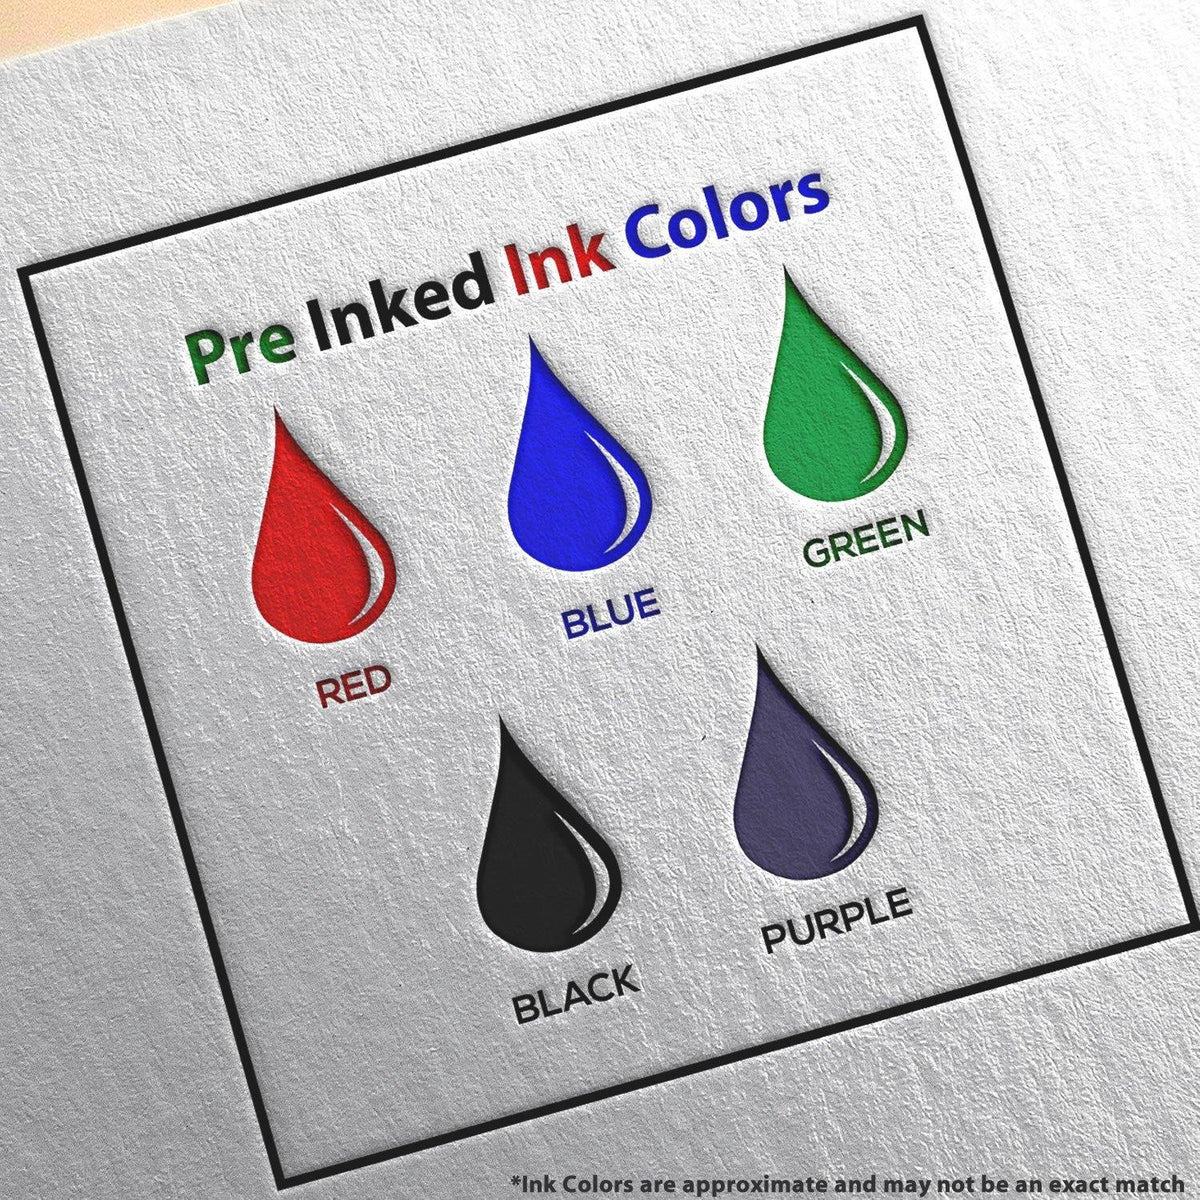 Slim Pre Inked Copy For Your Information Stamp Ink Color Options